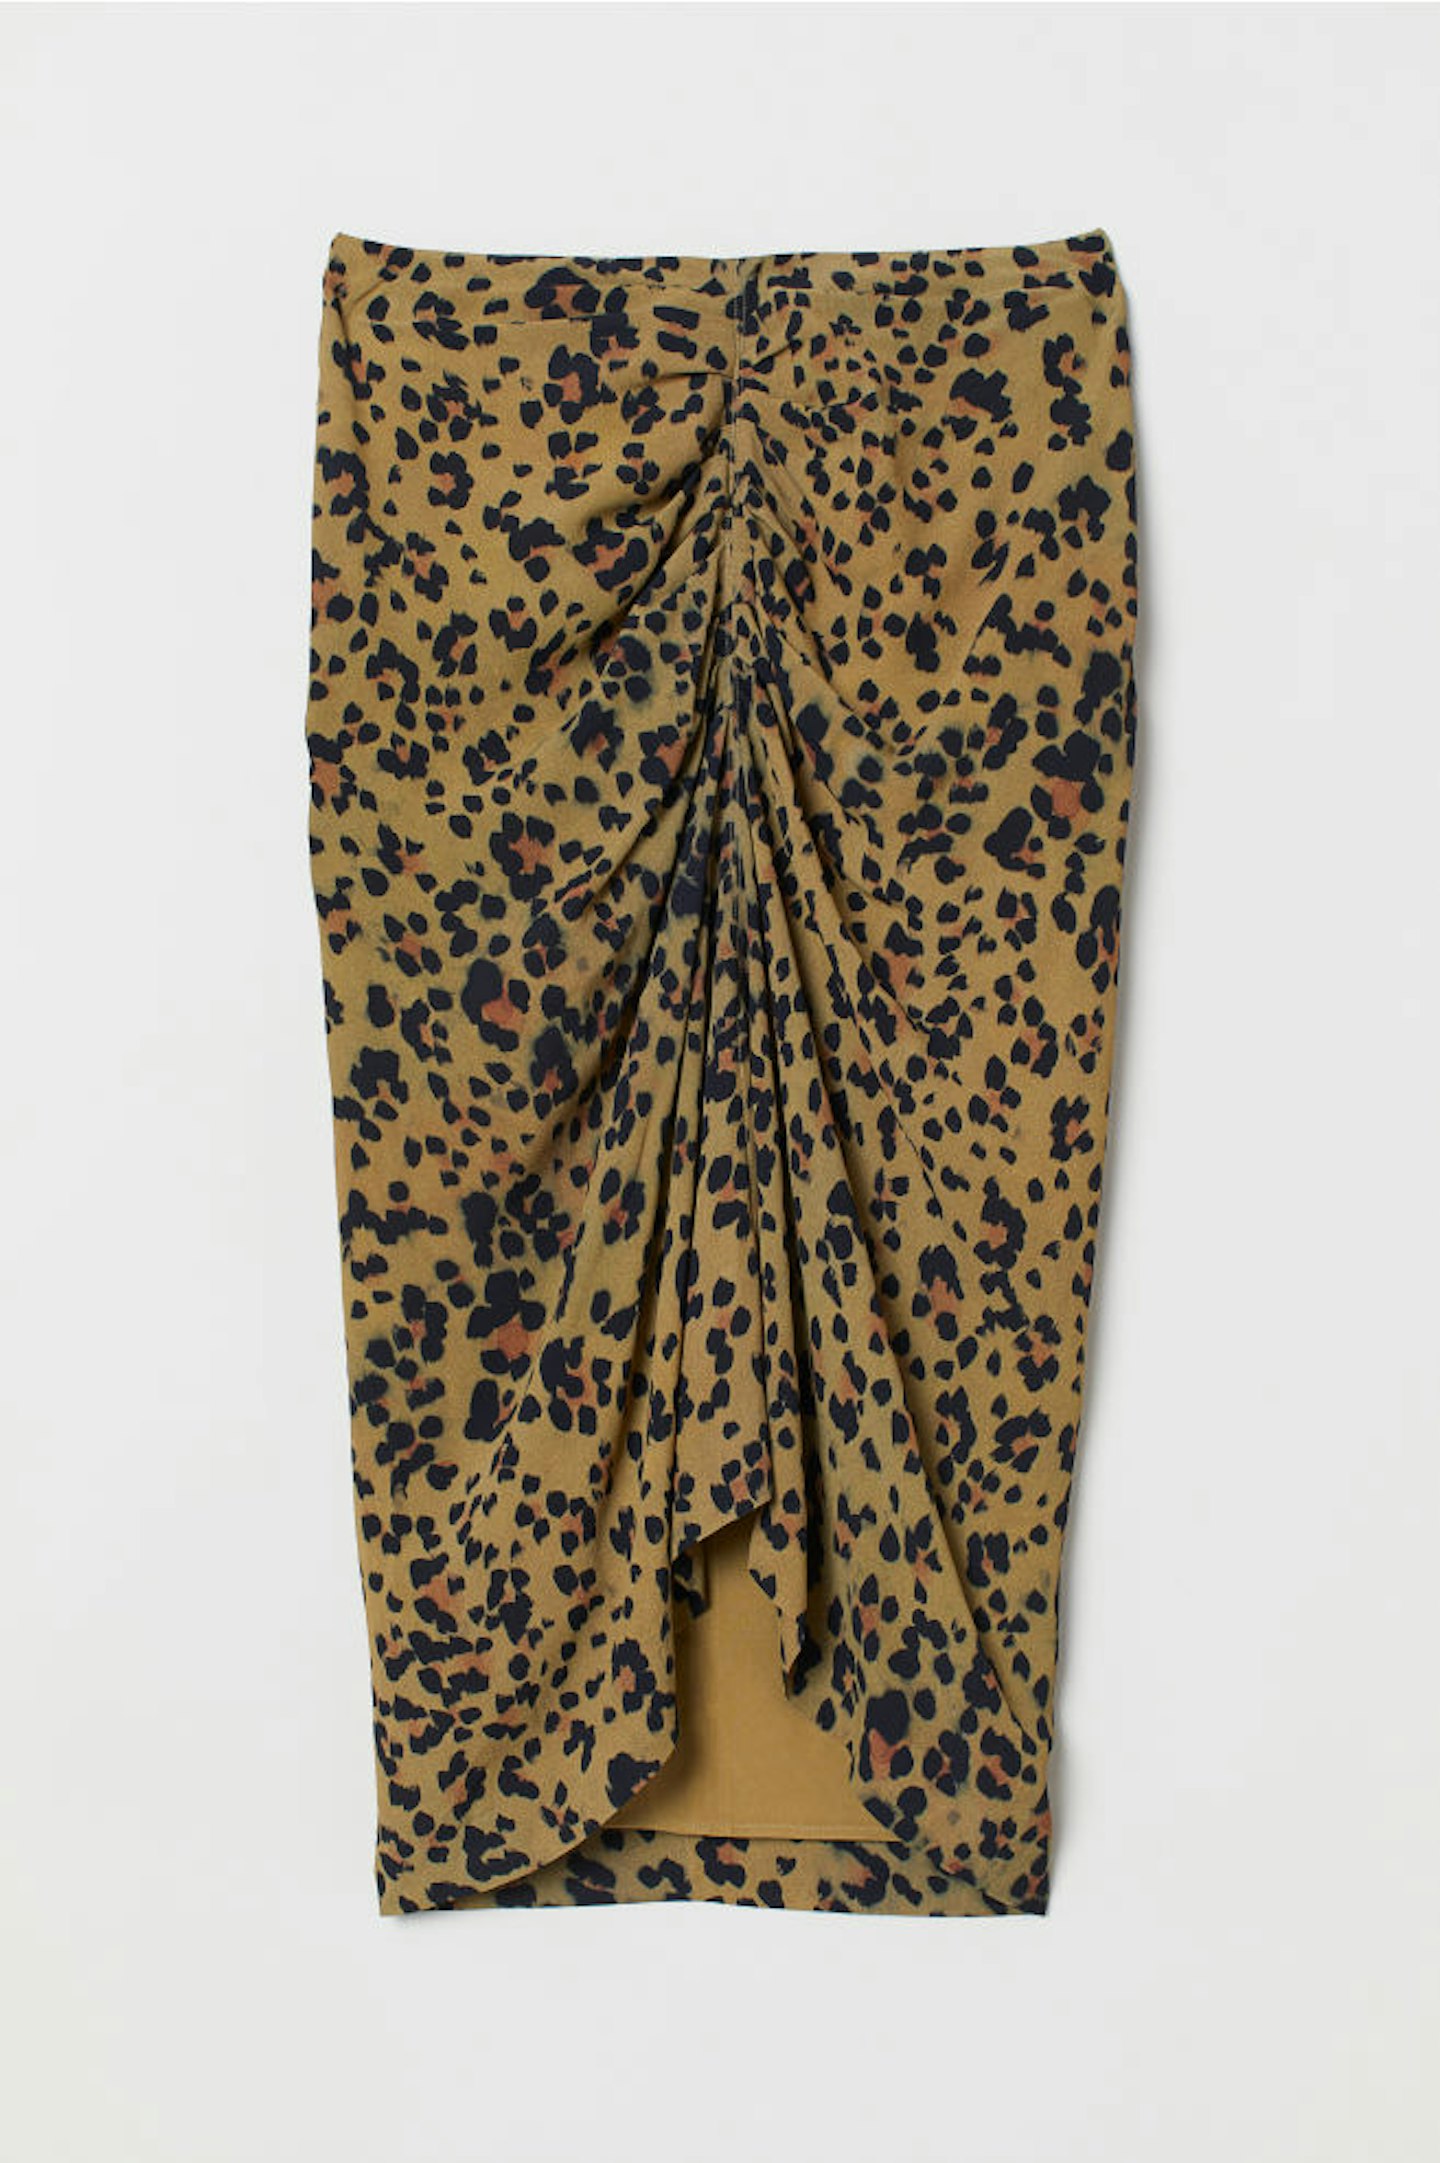 H&M, Draped Skirt, £49.99